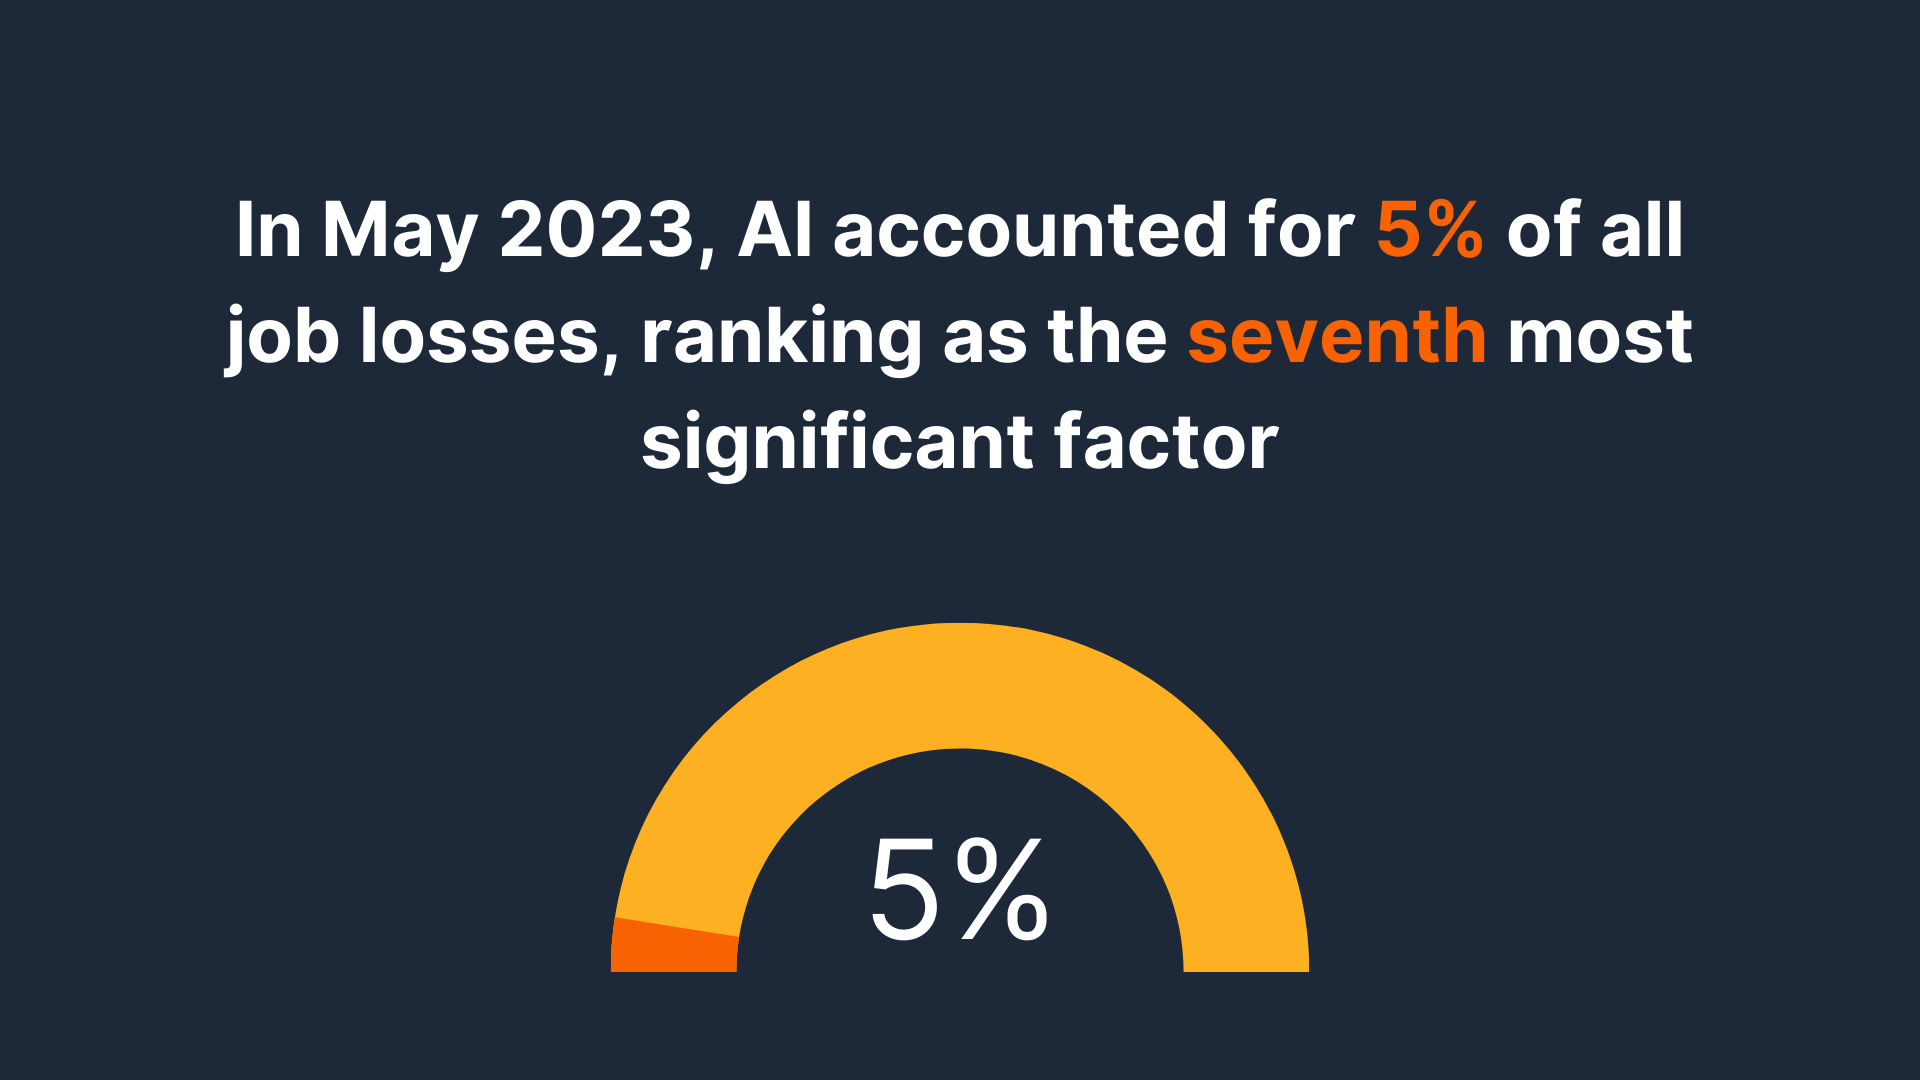 AI accounted for 5% of all job losses